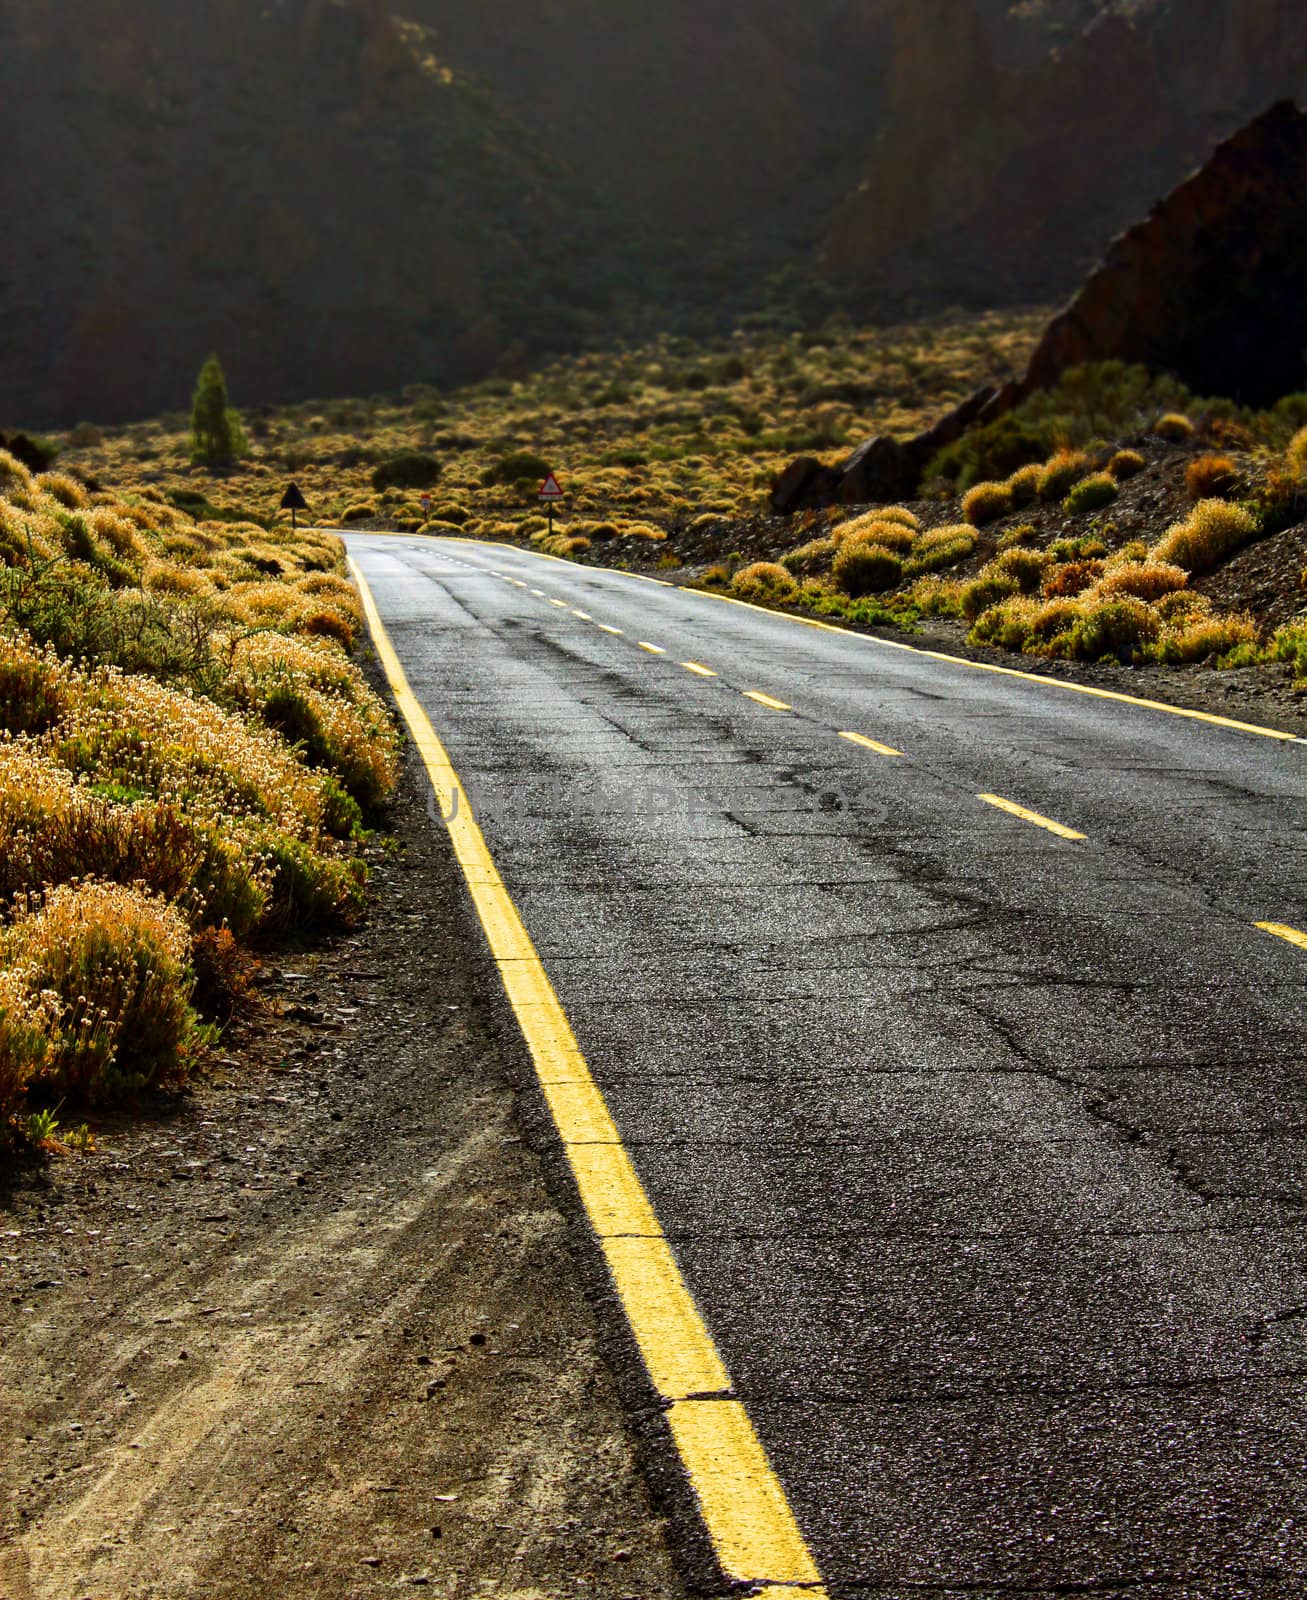 Desert road by anterovium